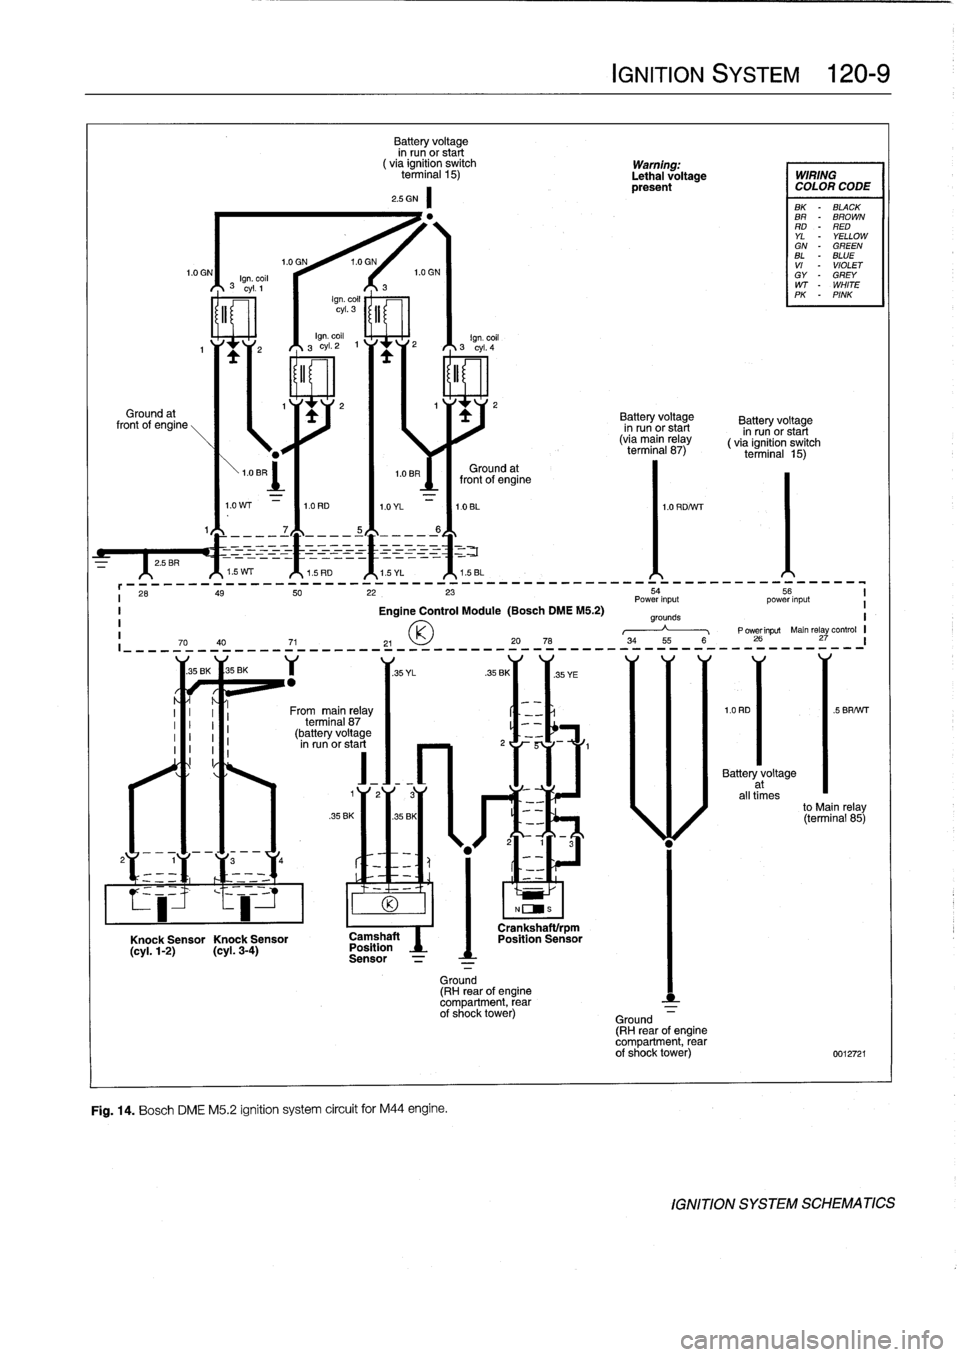 BMW 318i 1996 E36 Service Manual 
^1
.5WT
^1
.5RD
^1
.5YL
^1
.5BL
r

	

--__

	

____-

	

__-_

	

___-_

	

-___-_____--__--

	

-____-___

	

____-
i
26
g
5022
23

	

54

	

5

I

	

Power
input

	

power
input
I

	

Engine
Contro